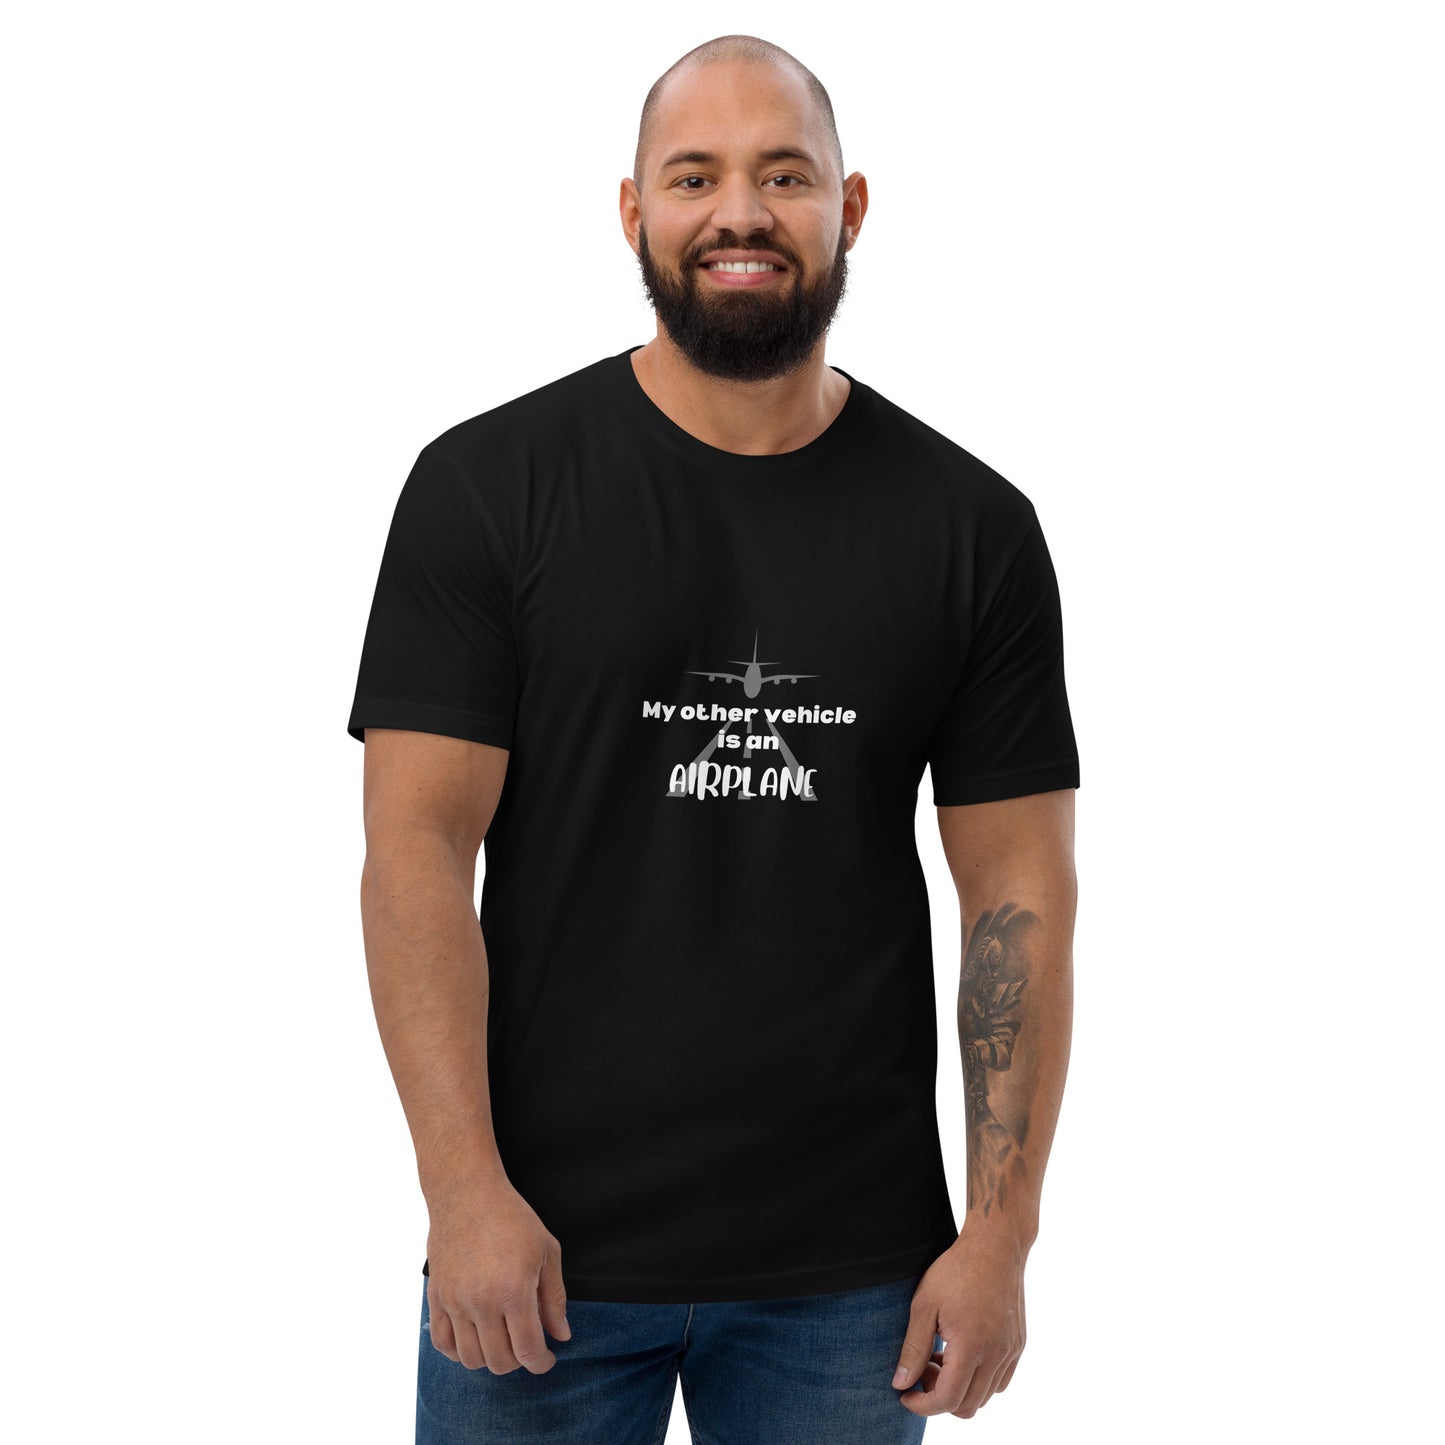 Men's White Airplane T-shirt